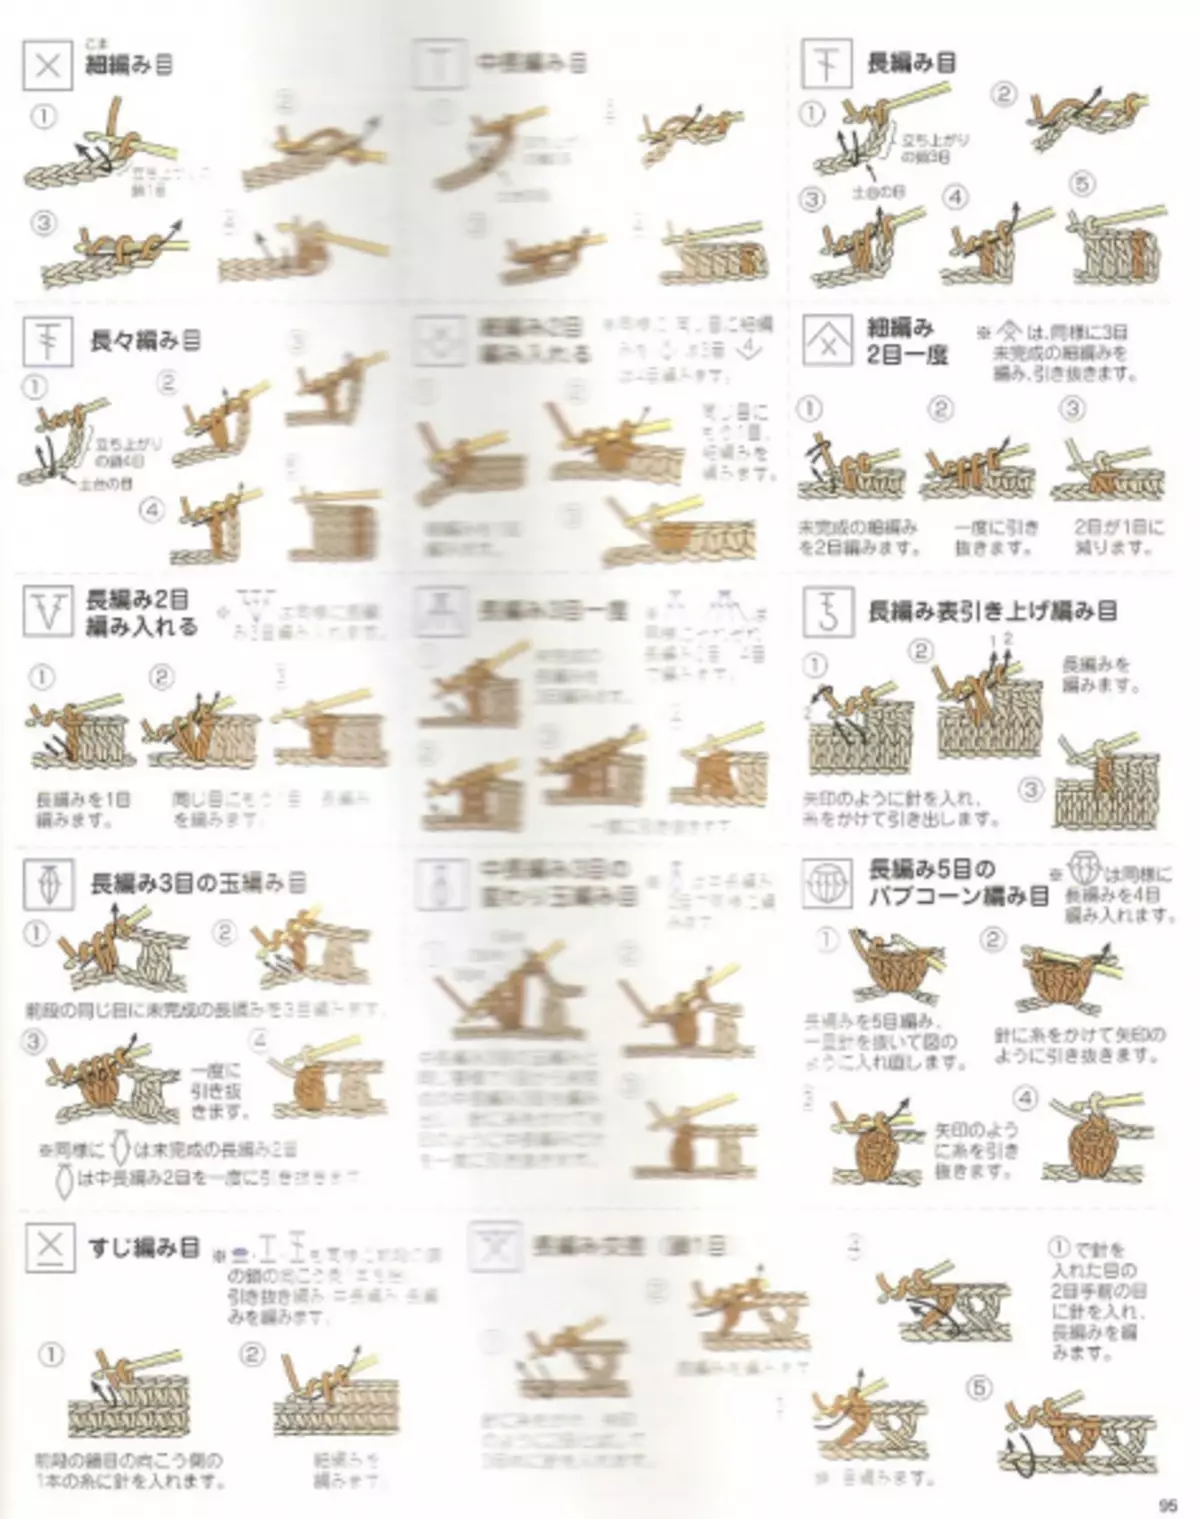 Majalah Jepang nganggo skema crochet